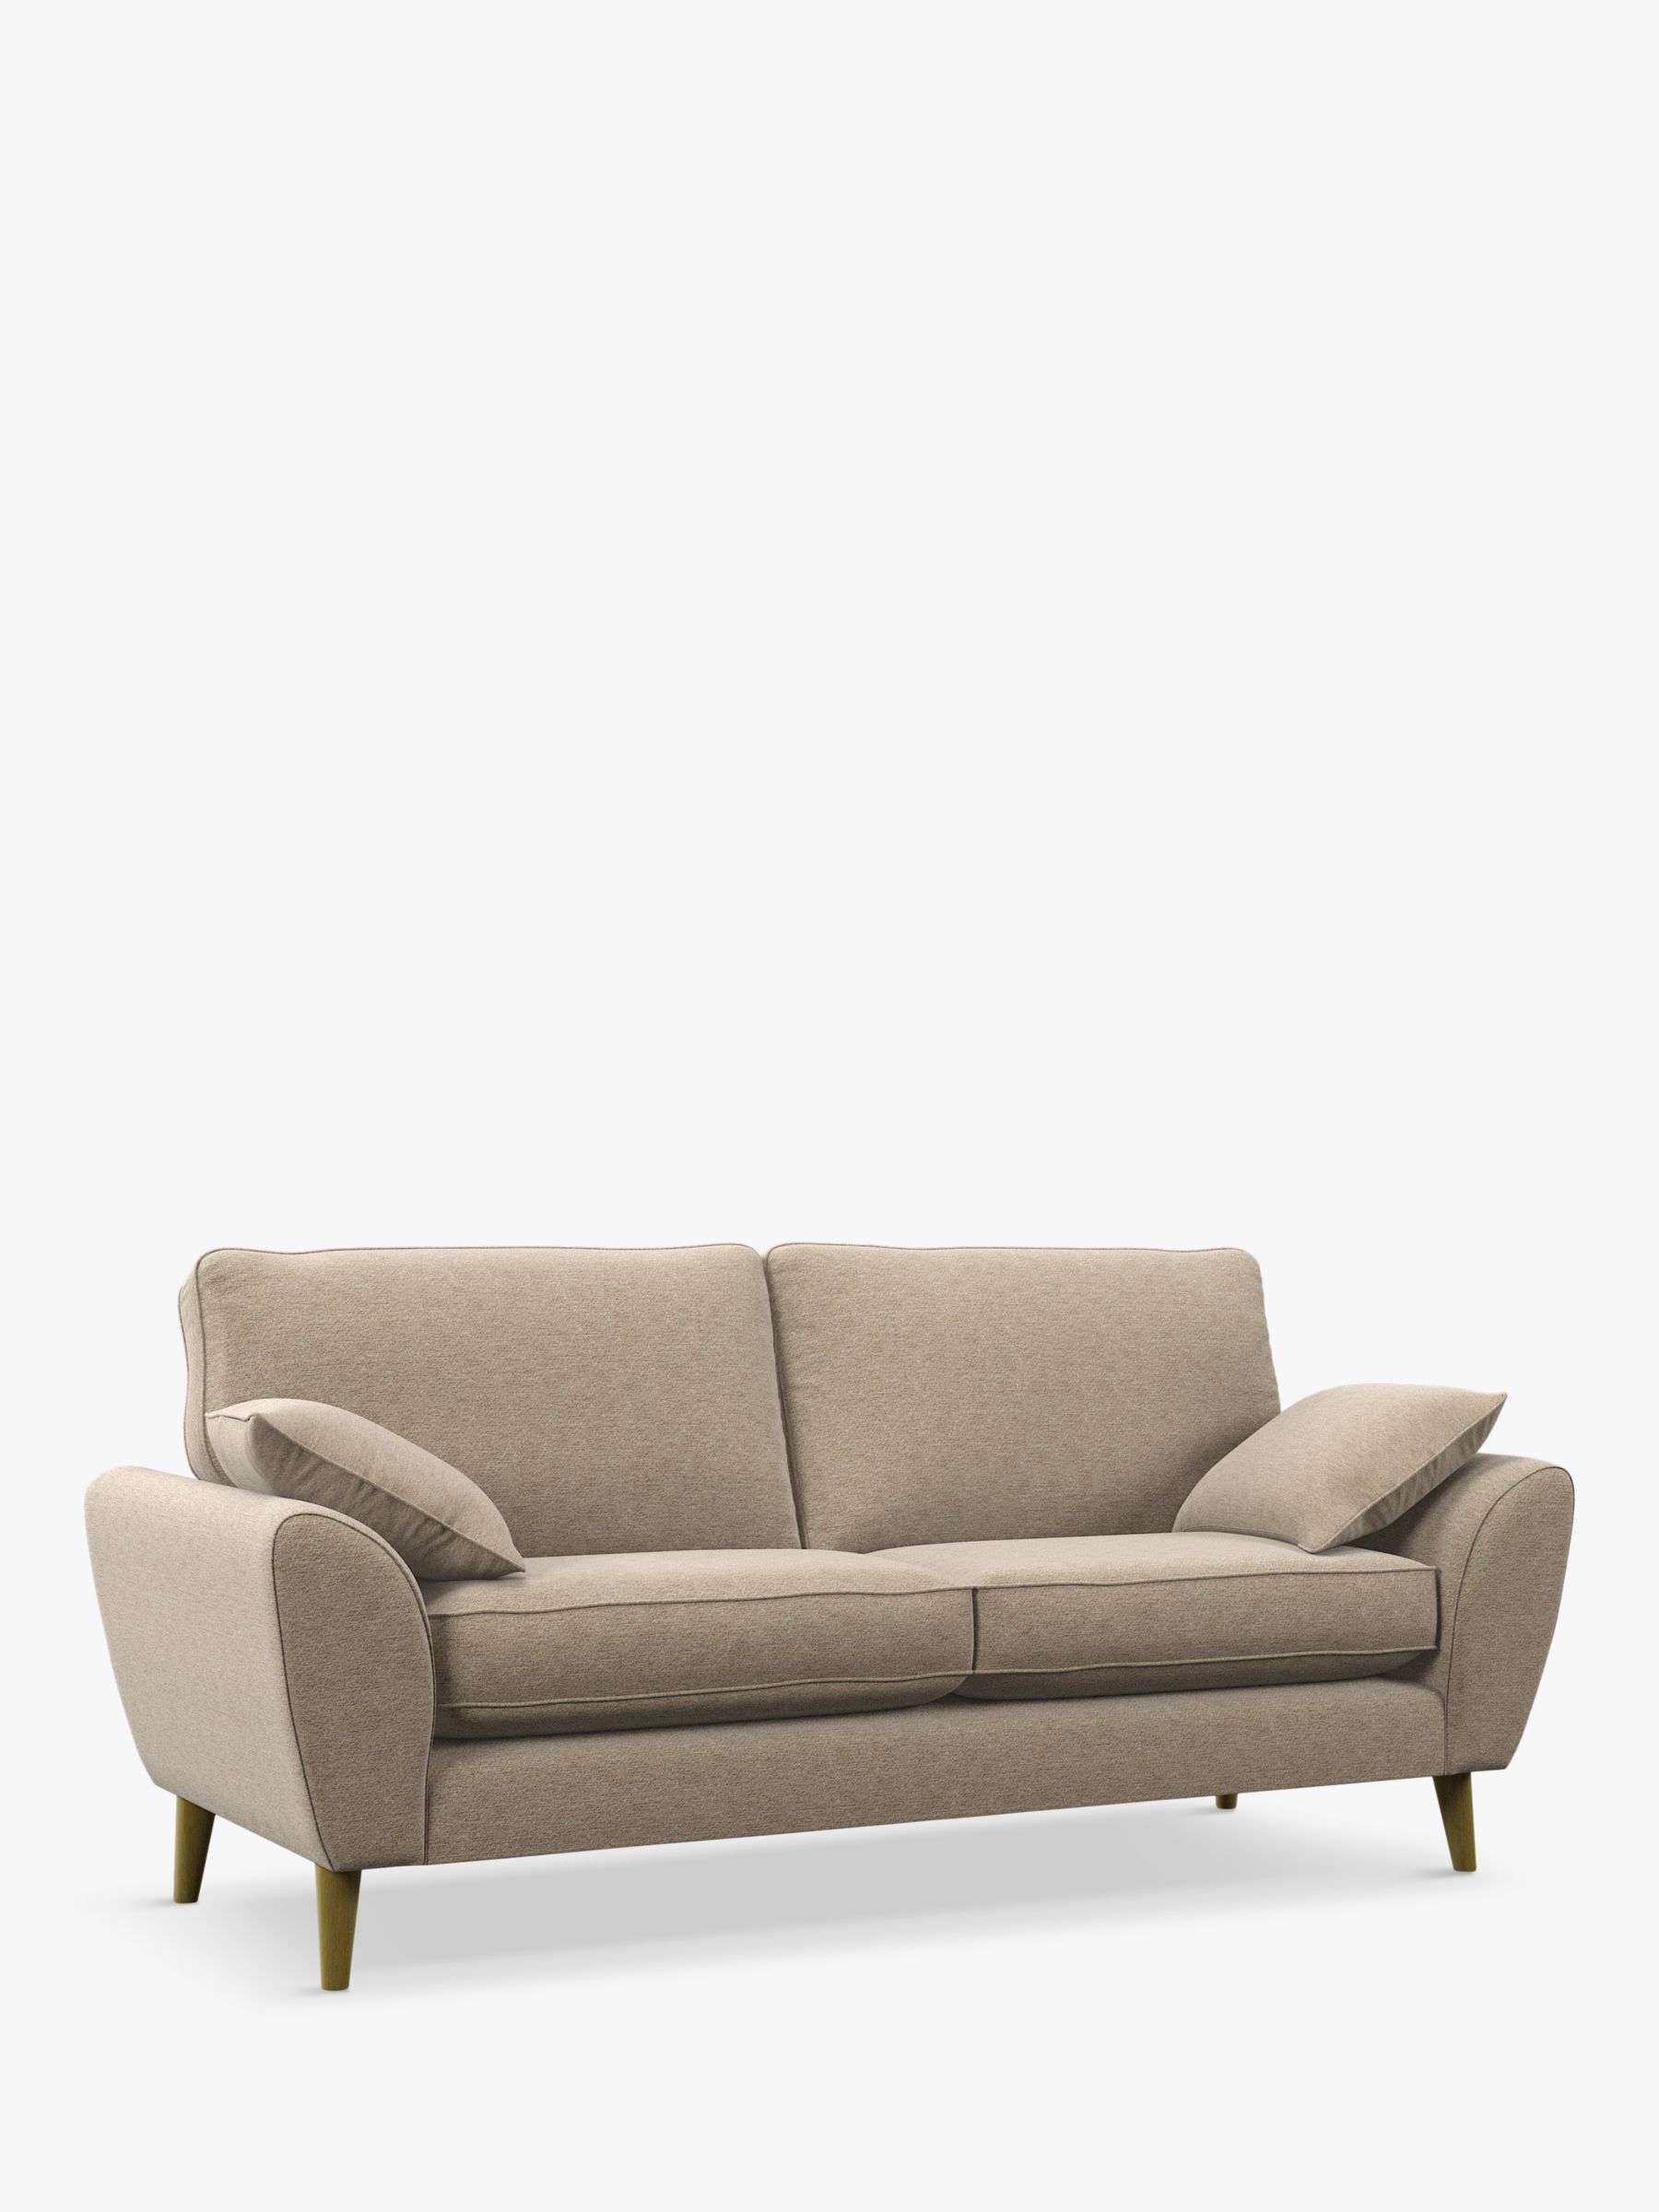 AMBLESIDE Range, John Lewis Ambleside Large 3 Seater Sofa, Light Leg, Textured Weave Natural